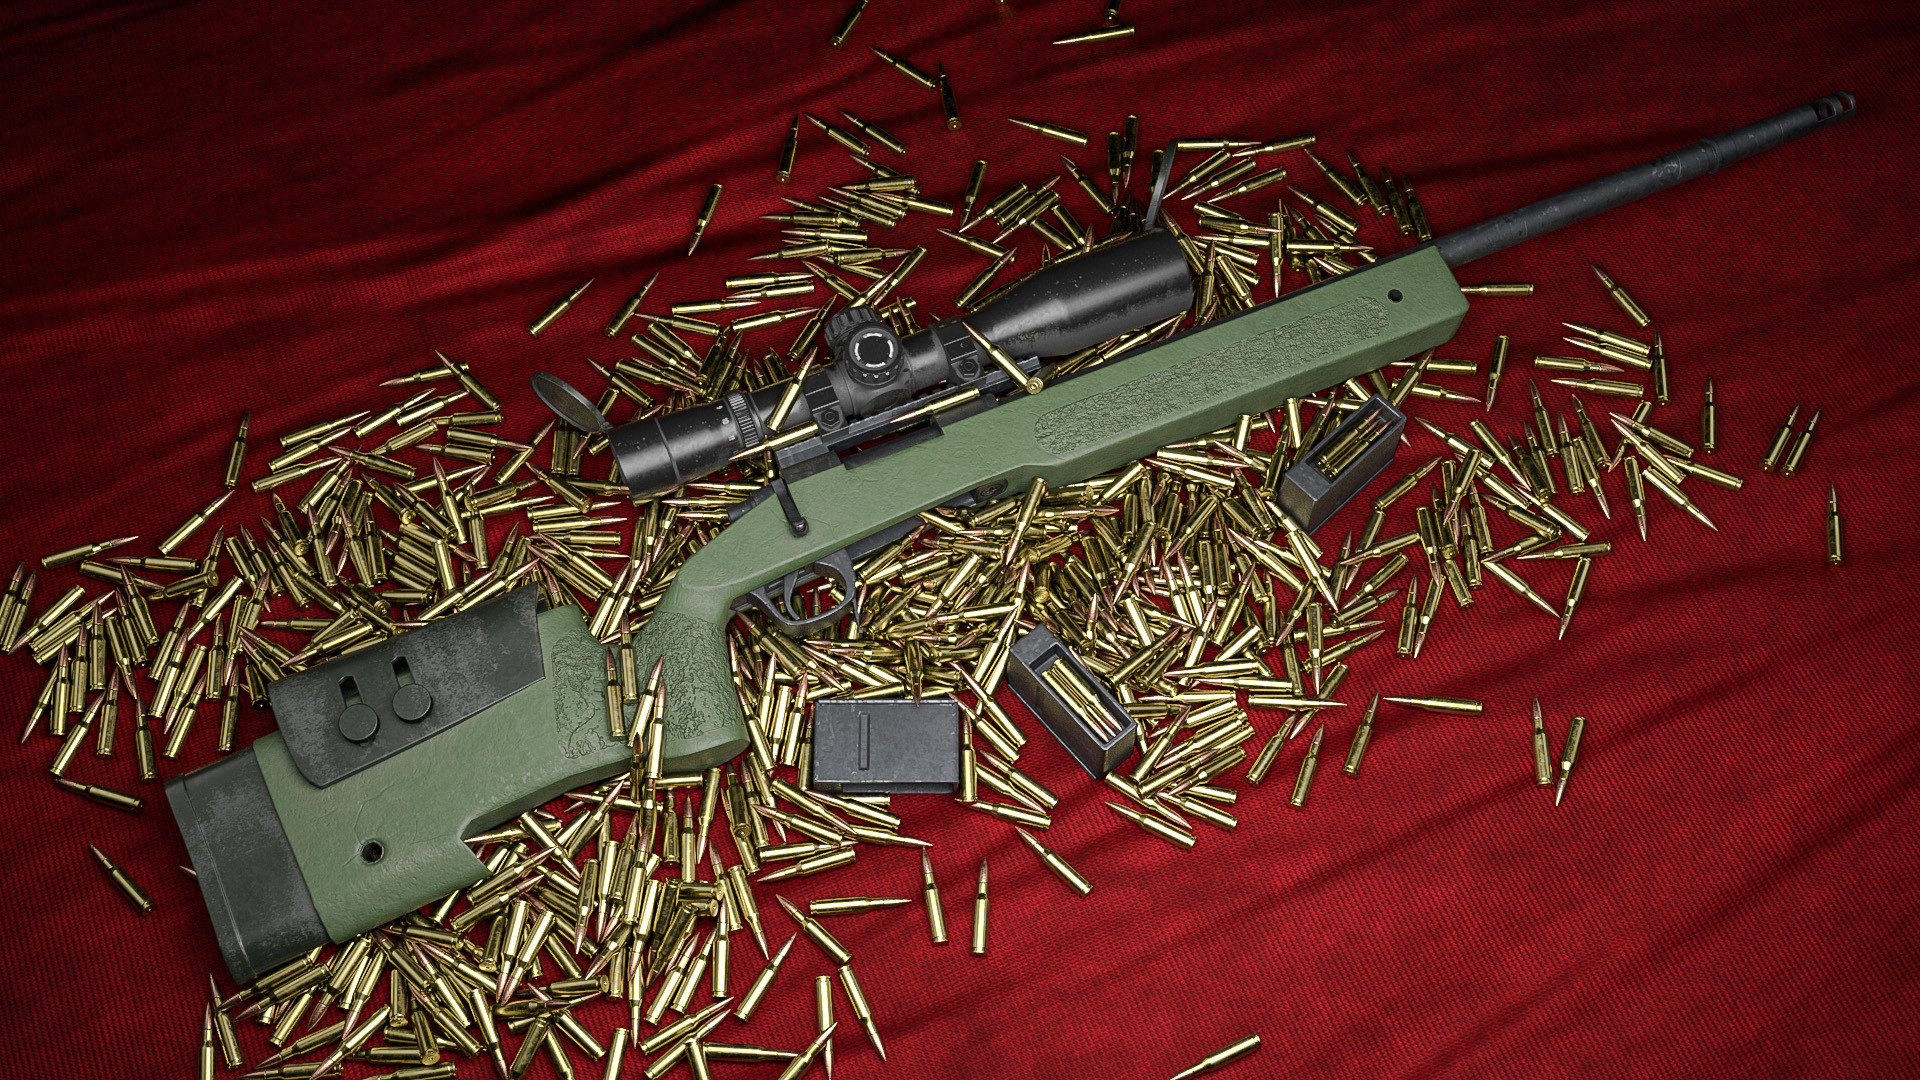 M40A5 Sniper Rifle